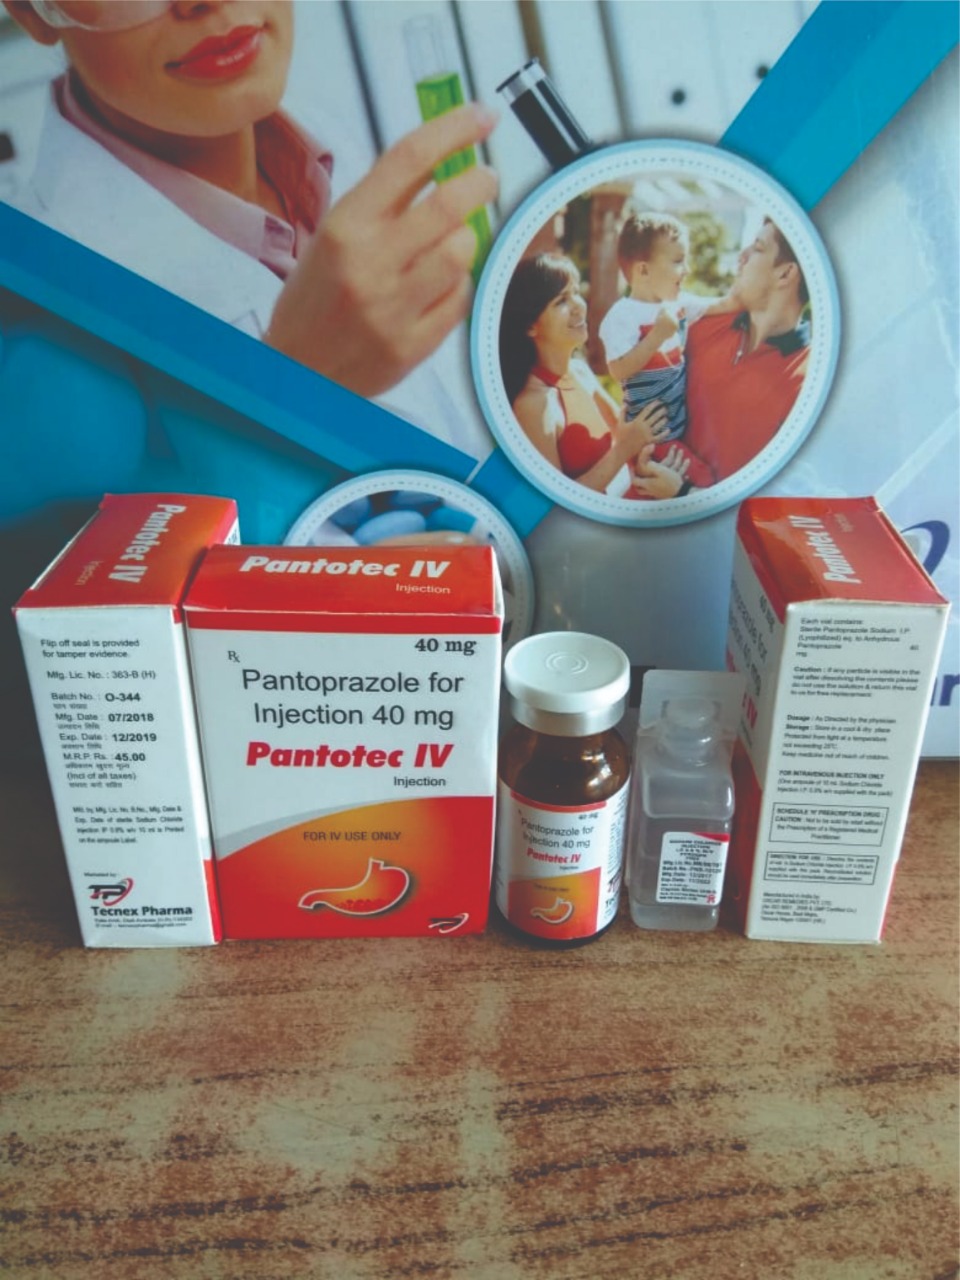 Product Name: PANTOTEC IV, Compositions of PANTOTEC IV are Pantoprazole for Injection 40mg - Tecnex Pharma